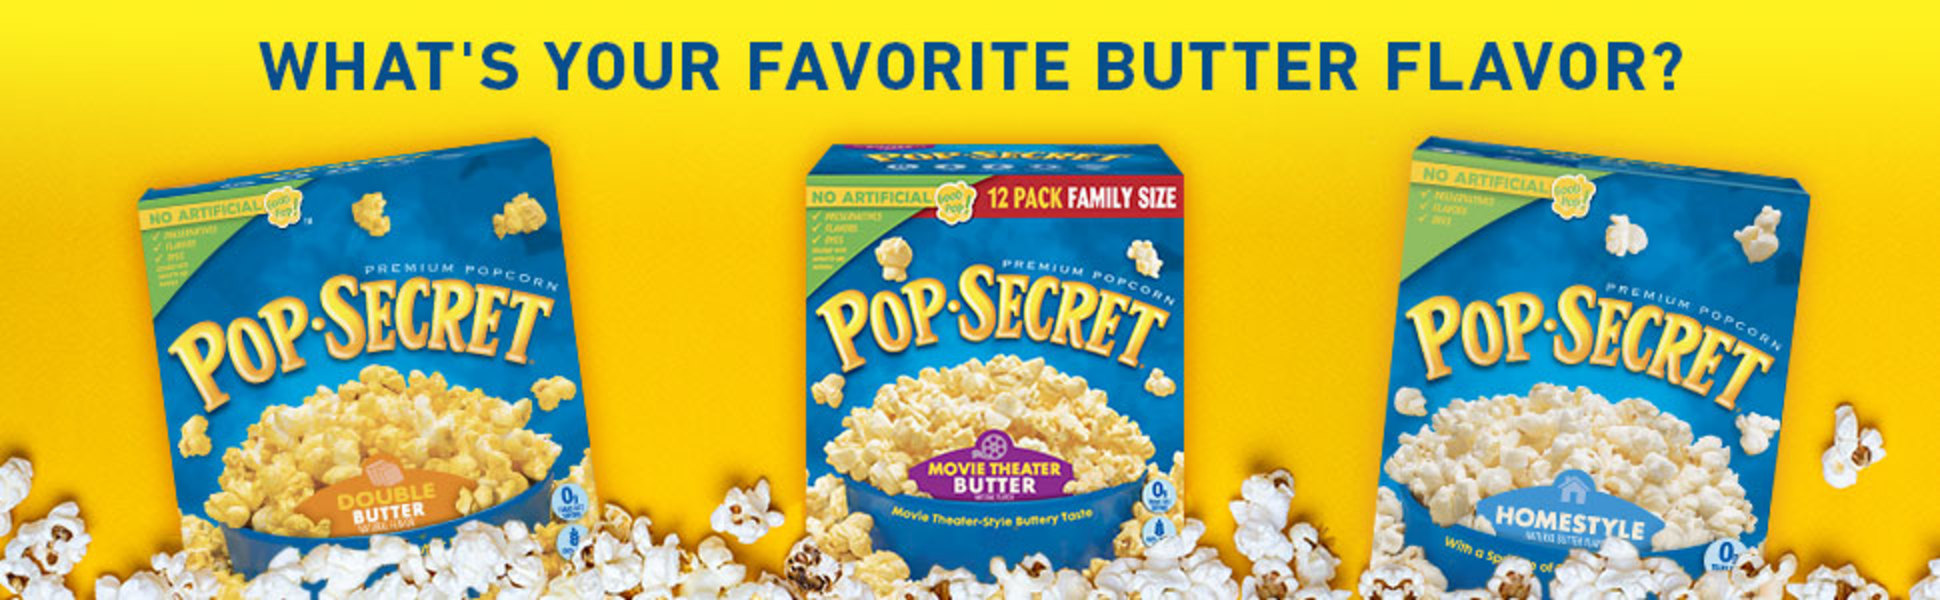 Pop Secret Popcorn, Sweet 'n Crunchy Caramel Microwave Popcorn, 2.64 oz  Bags, 3 Ct